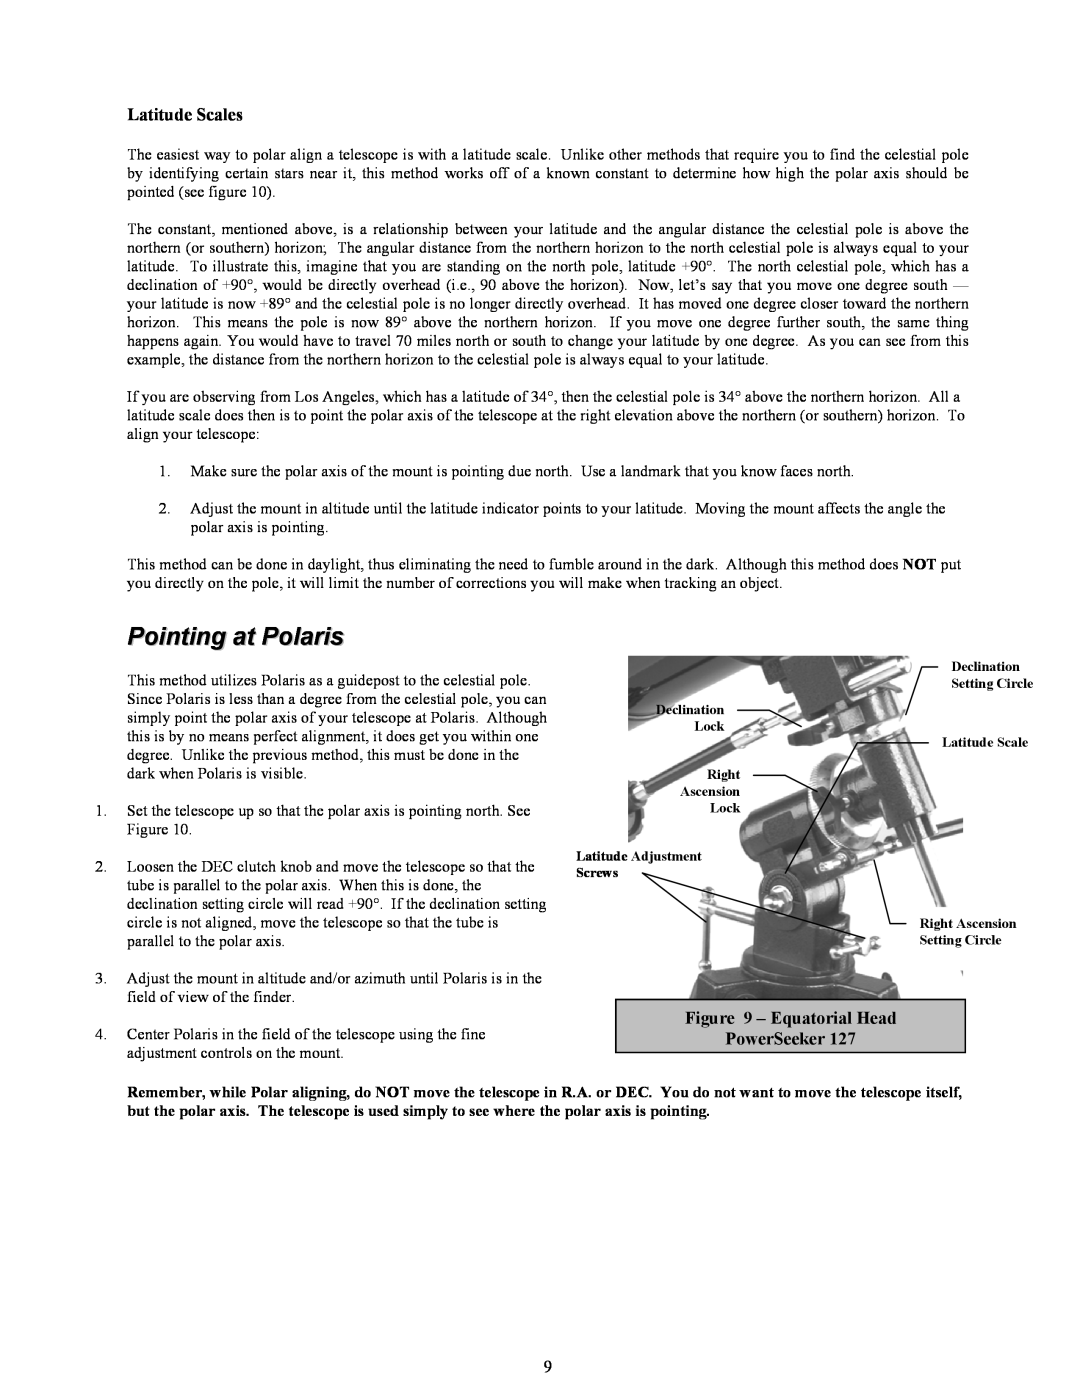 Celestron 127 manual Pointing at Polaris, Latitude Scales, Equatorial Head PowerSeeker 